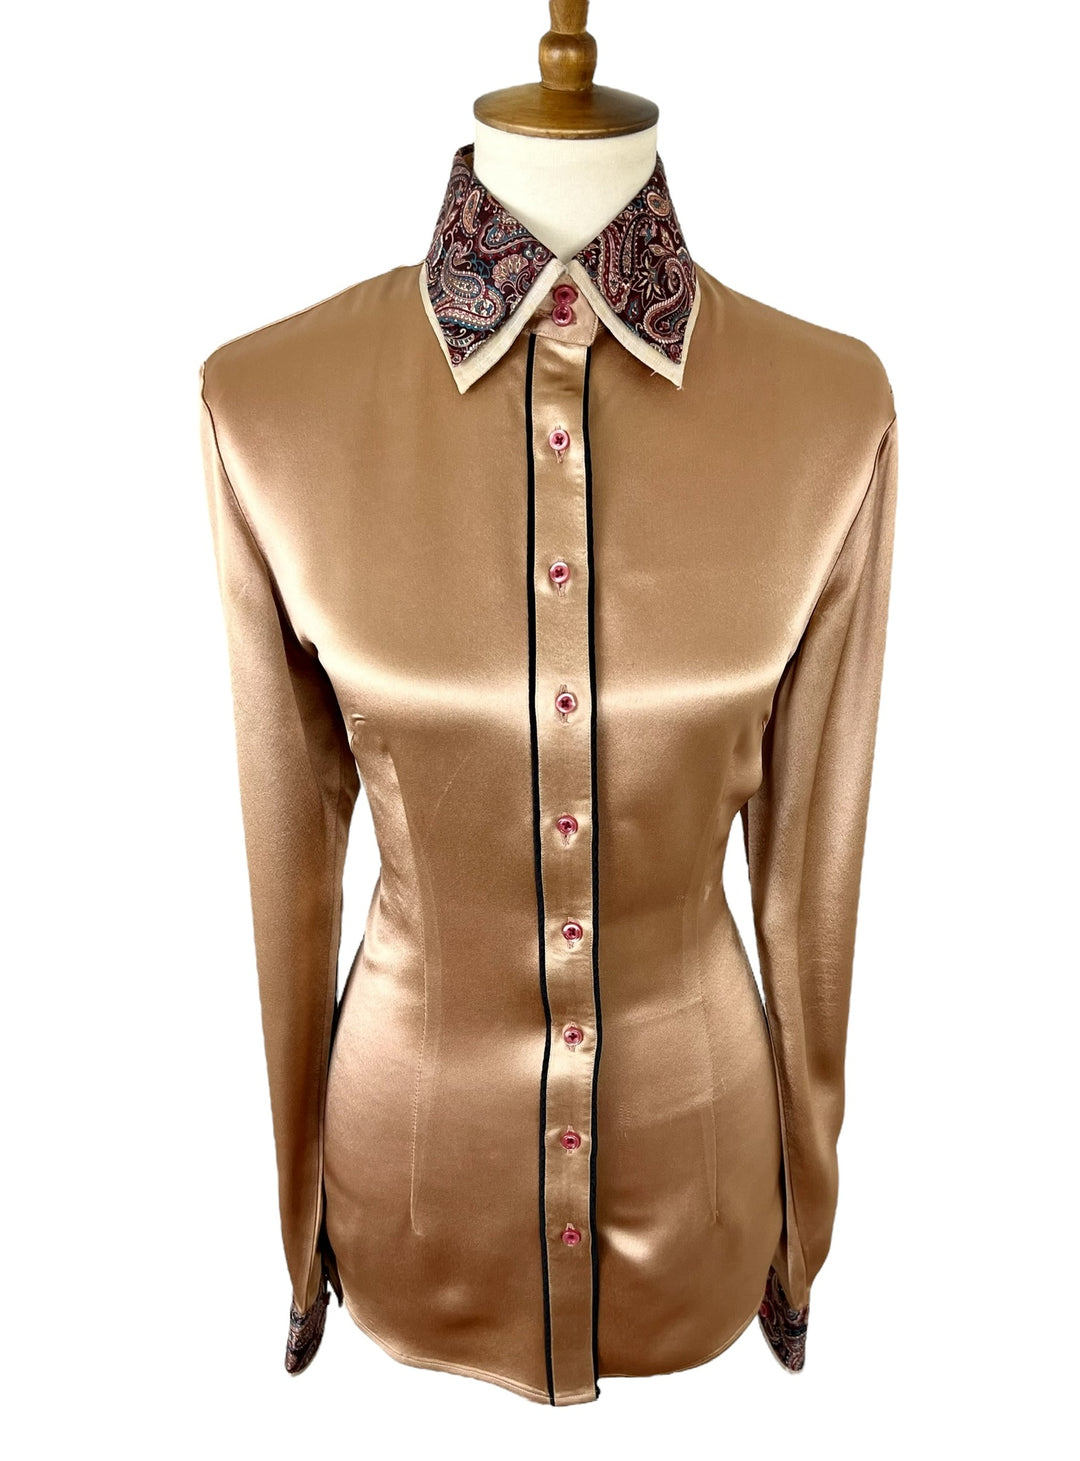 Bronze Satin Western Shirt (Size 38/40)